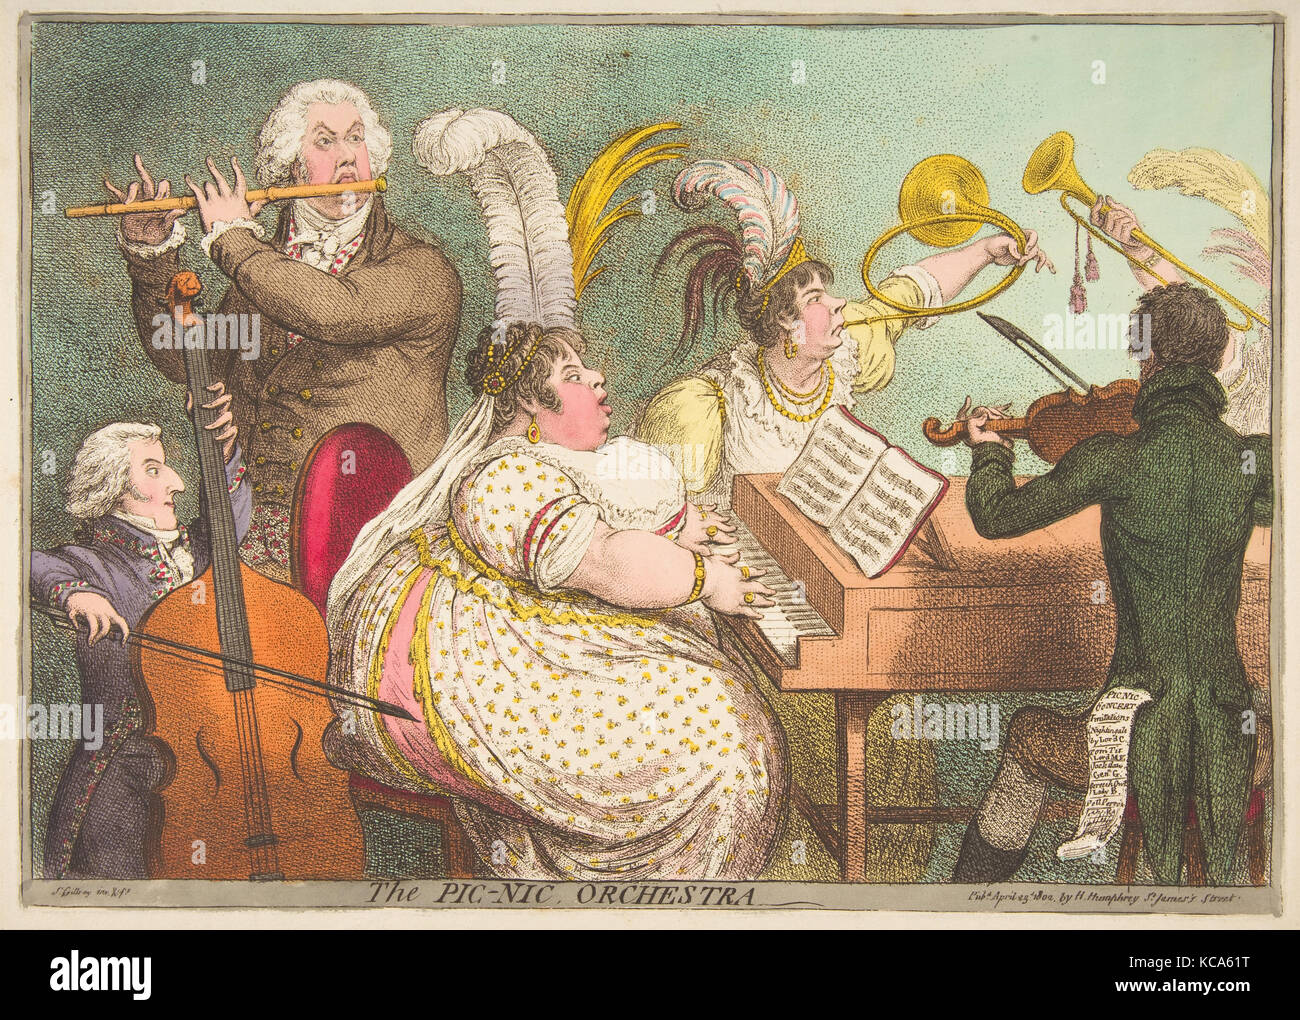 The Pic-Nic Orchestra, James Gillray, April 23, 1802 Stock Photo